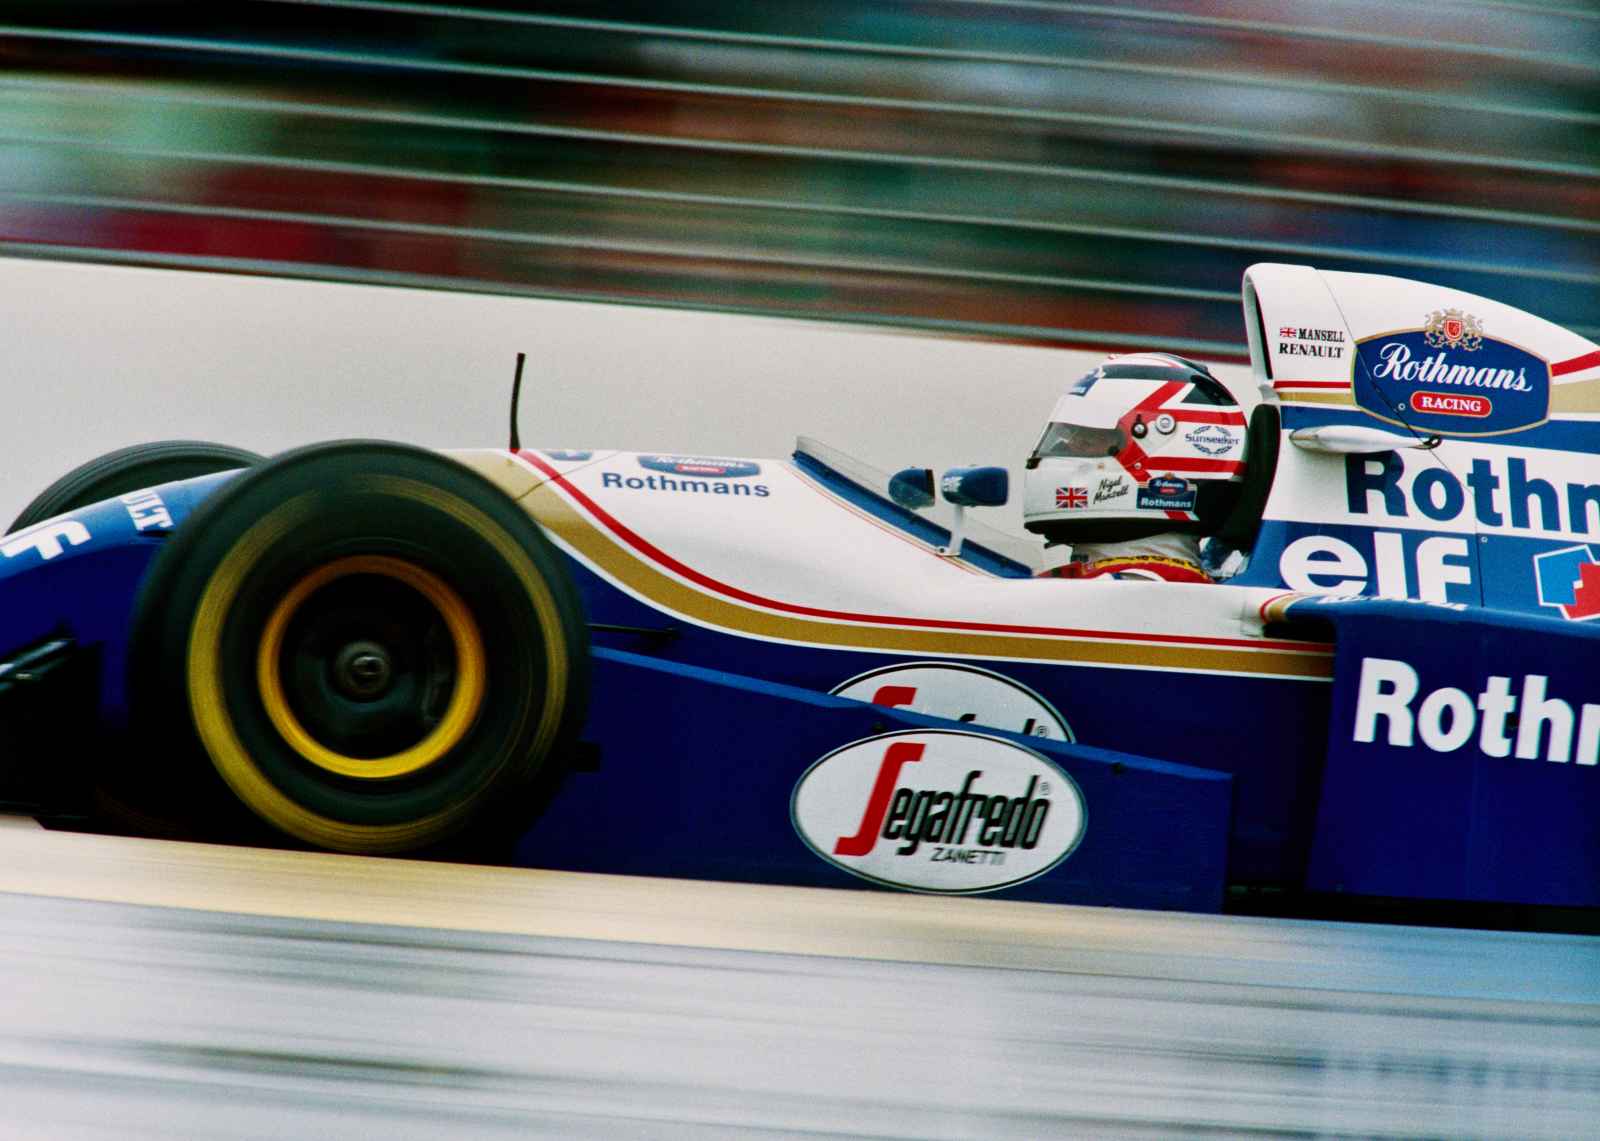 8º lugar: Nigel Mansell (ING) - 31 vitórias.